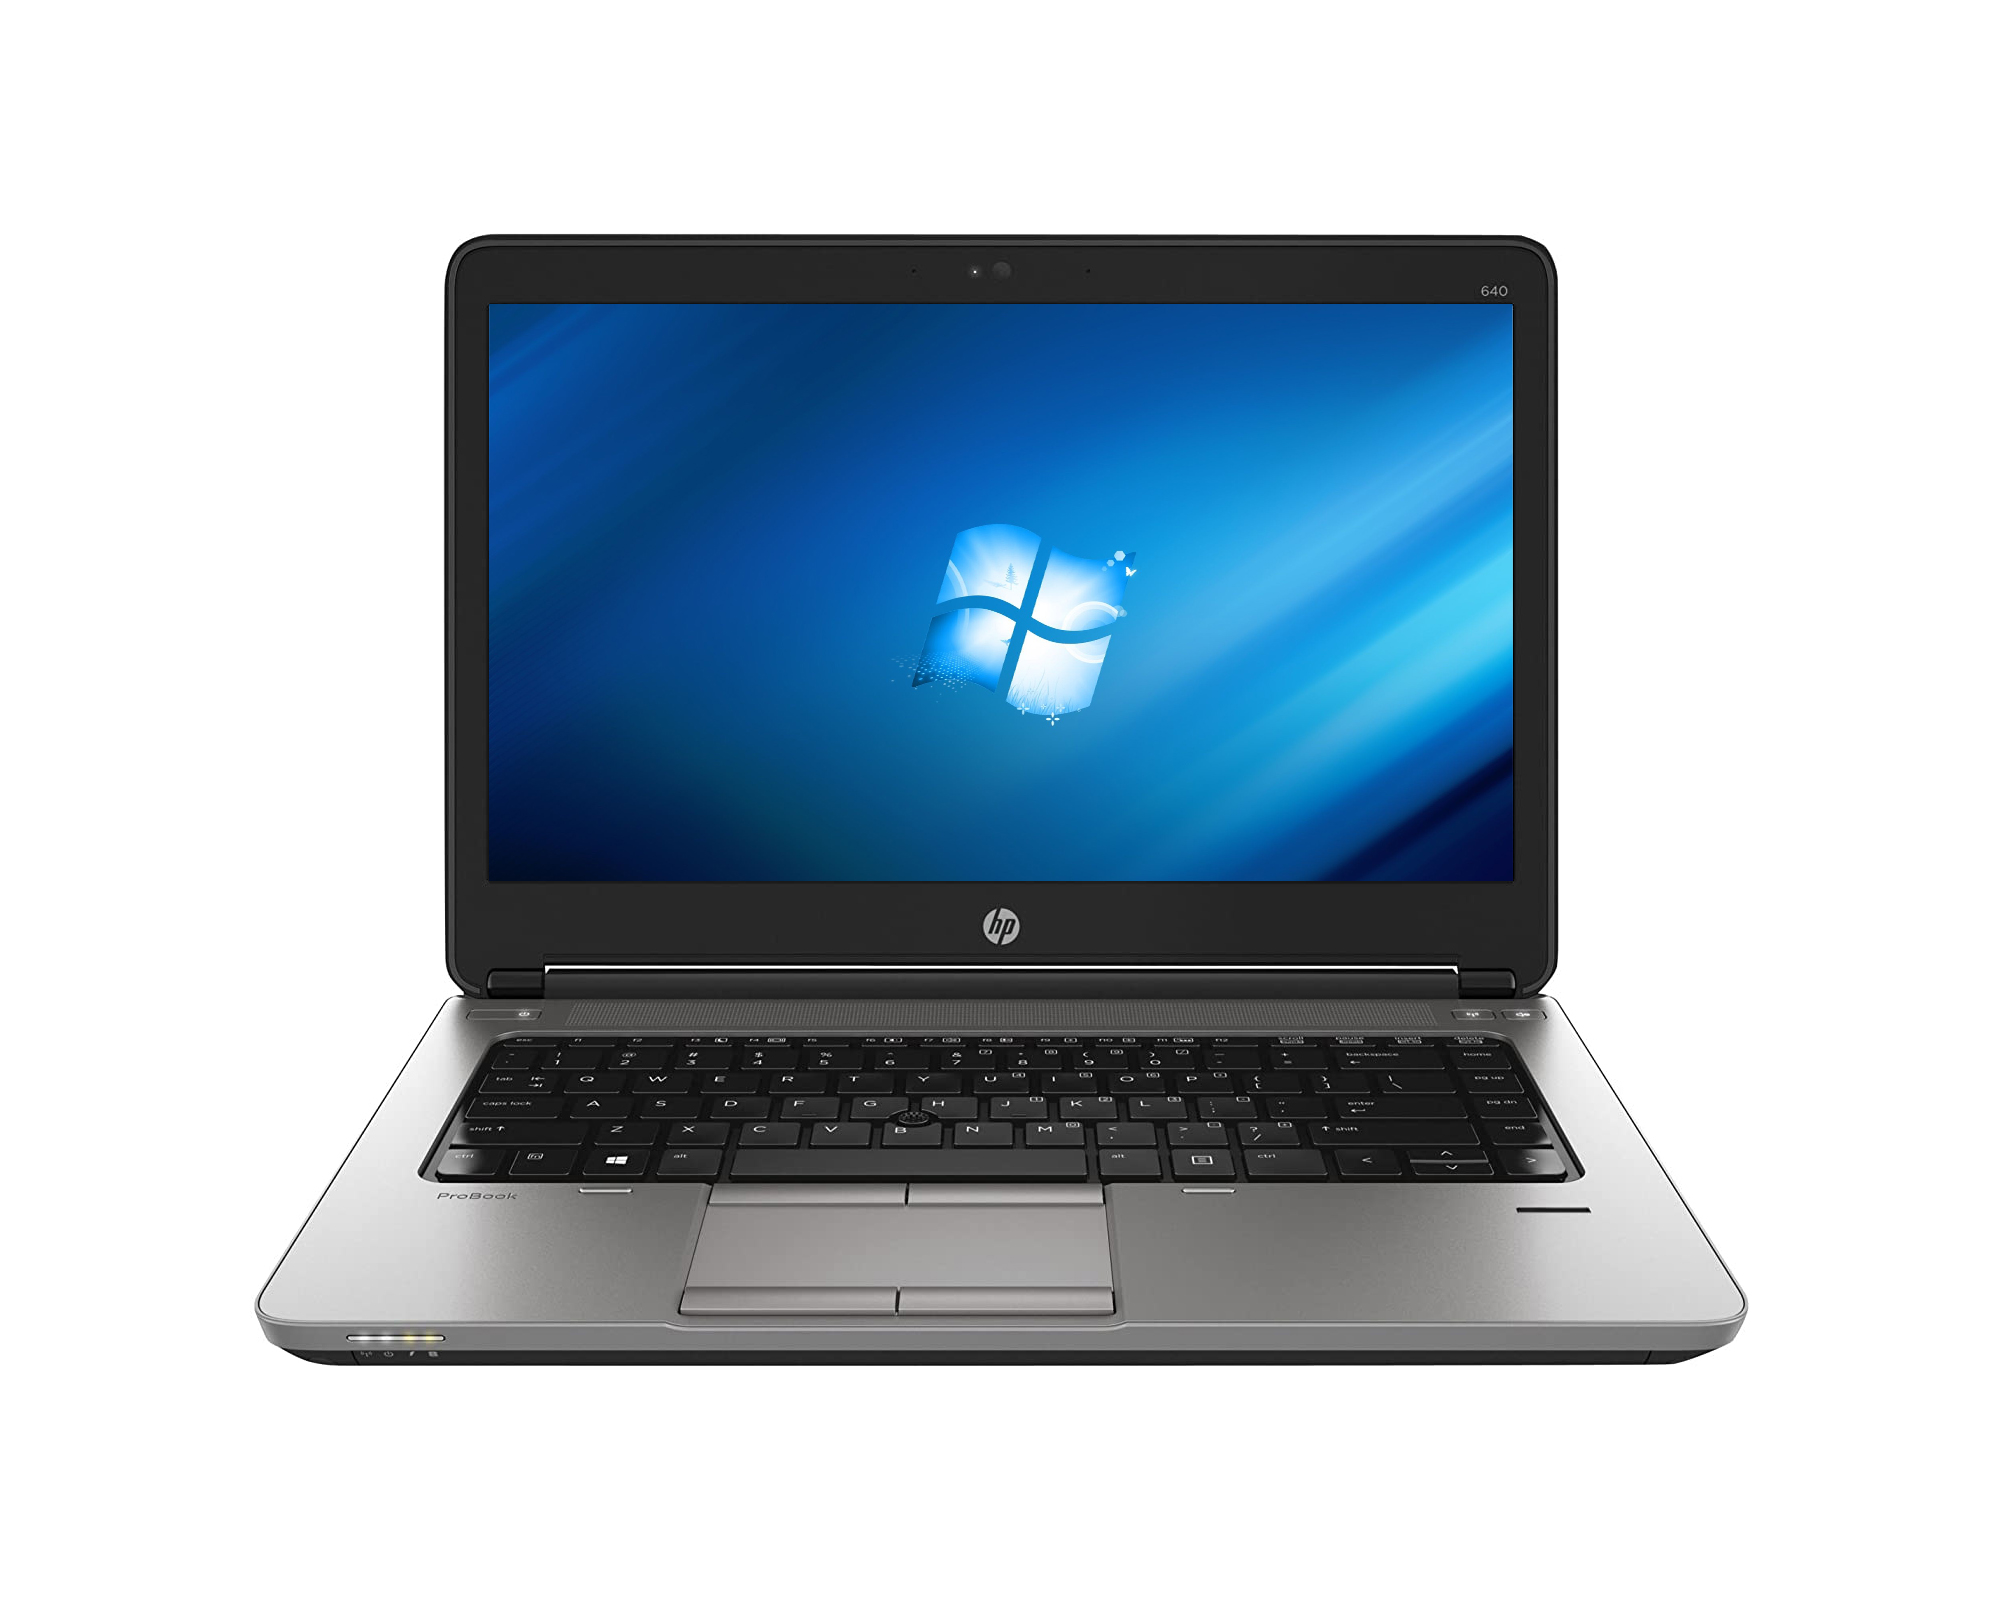 HP PROBOOK 640 G1 14″ LAPTOP INTEL CORE i5-4200M 4th GEN 2.5GHZ WEBCAM 8GB RAM 500GB HDD WINDOWS 10 PRO